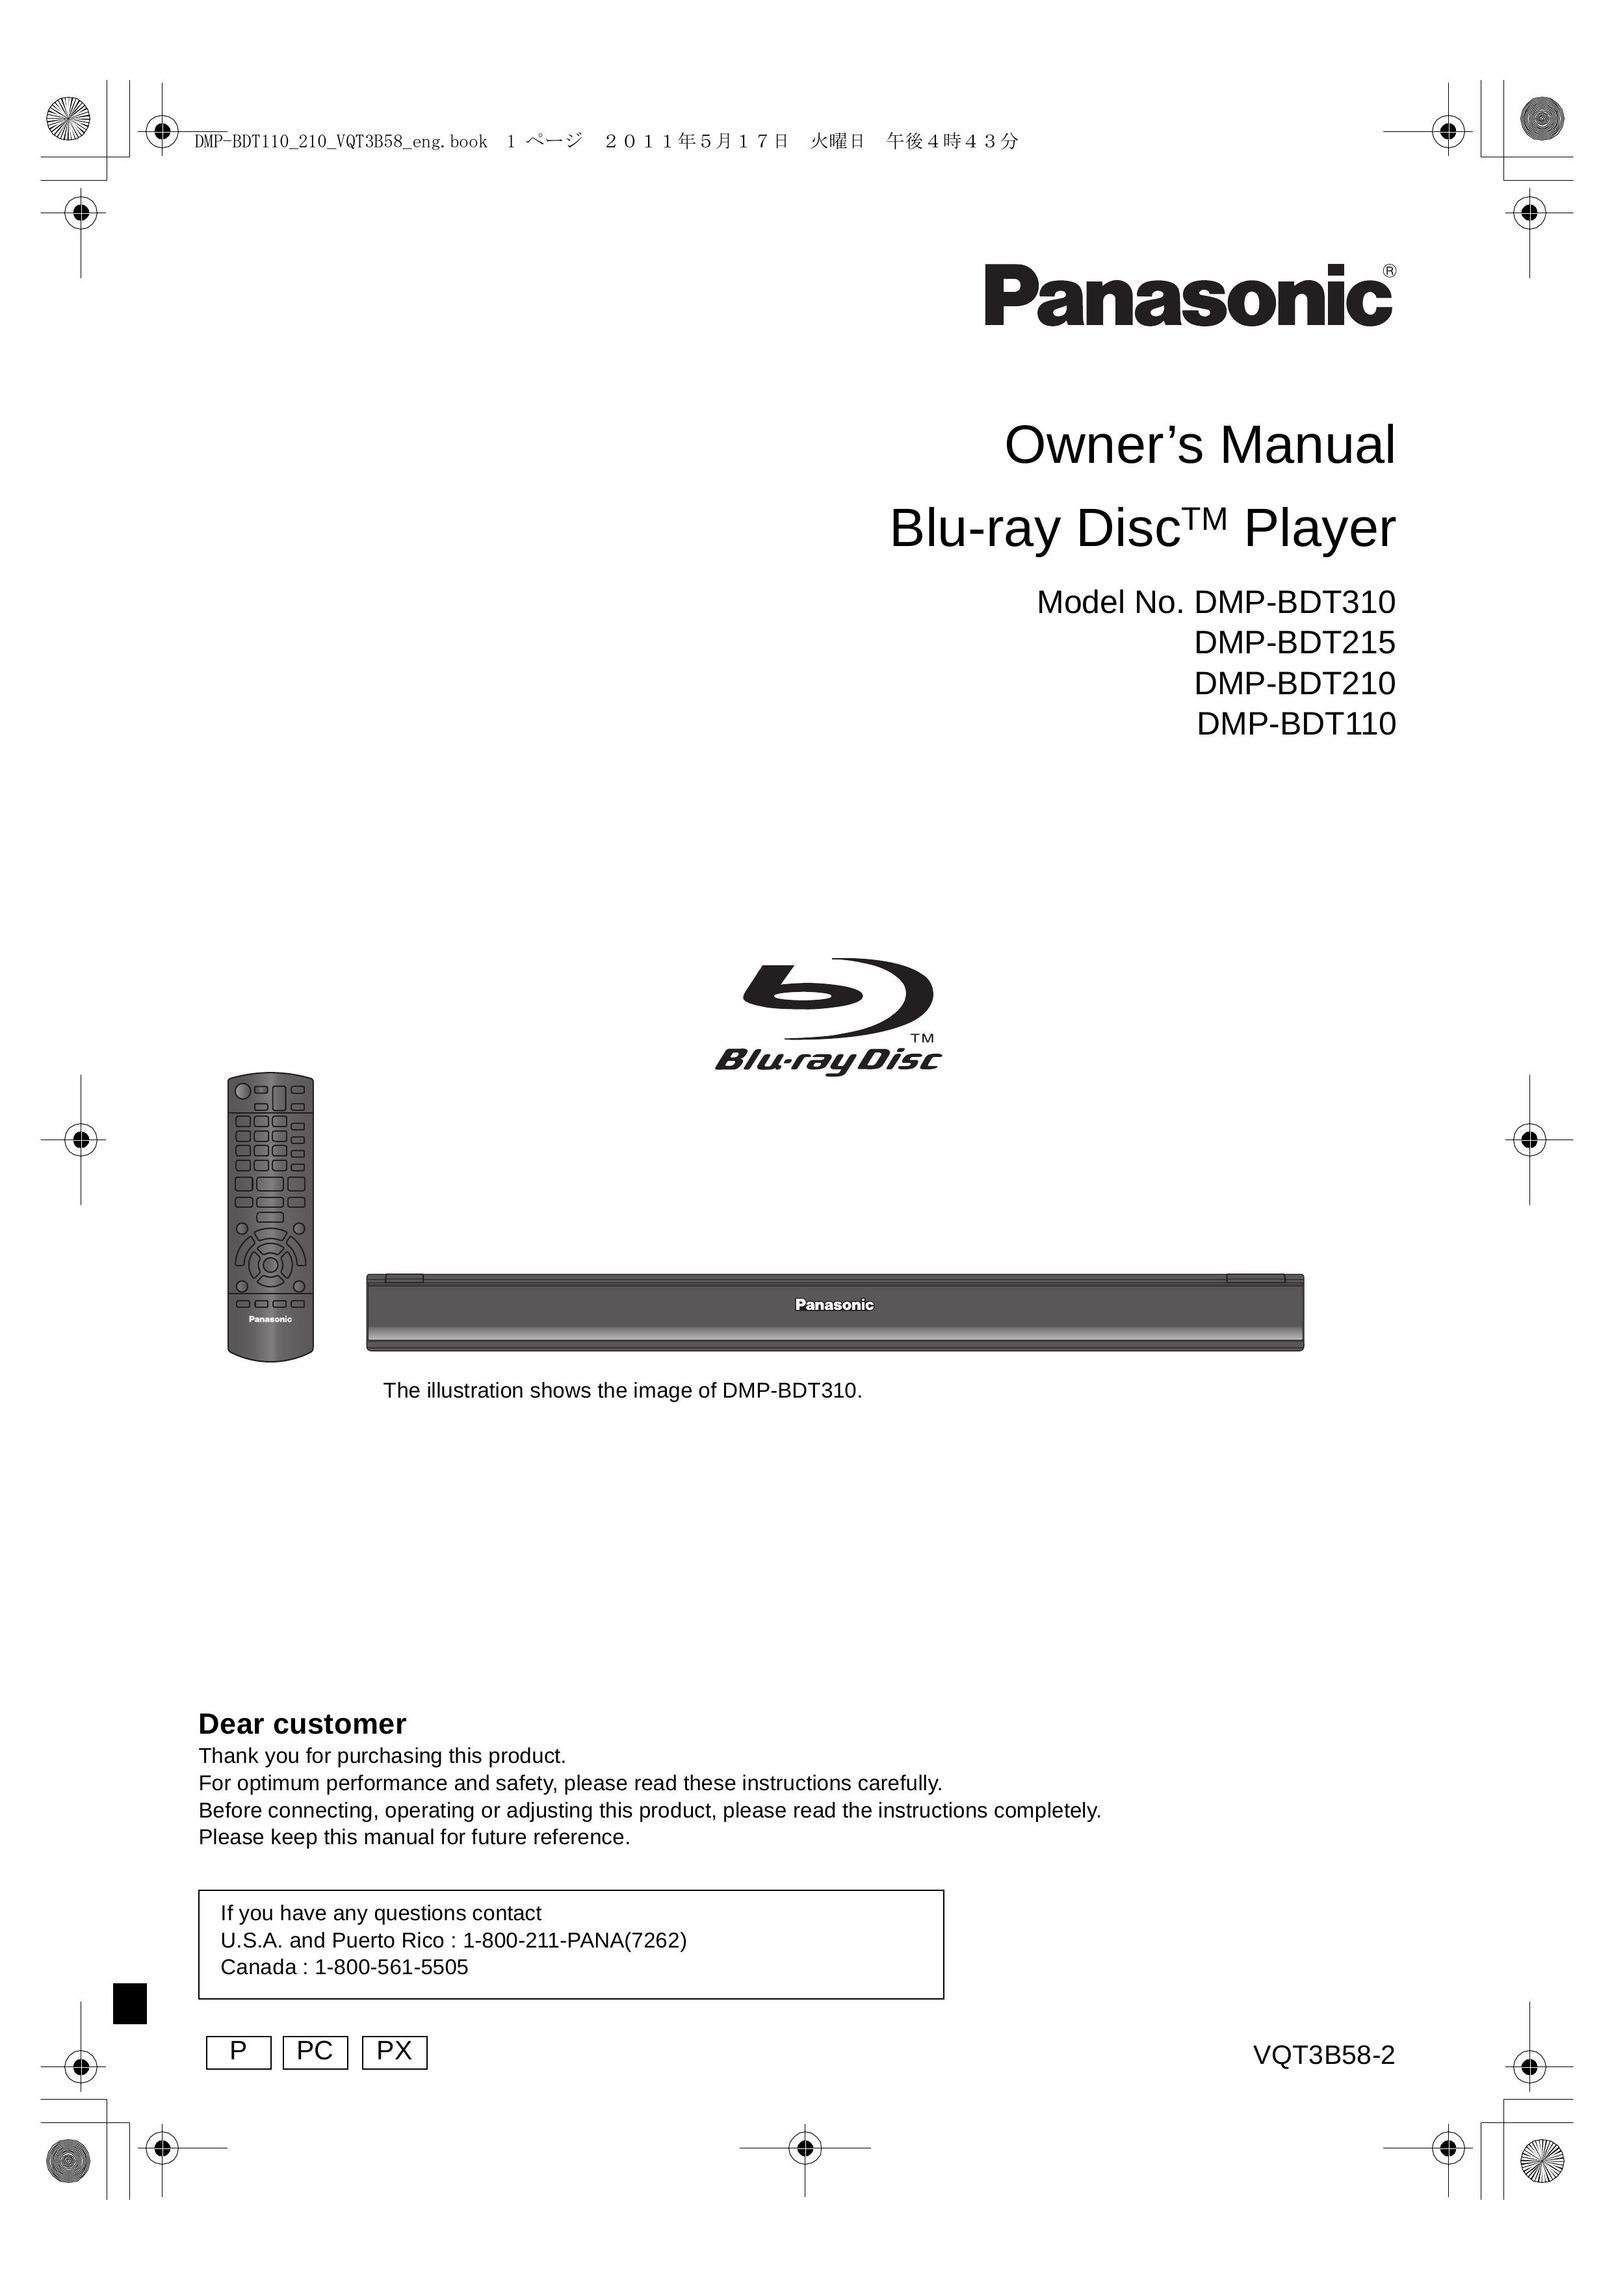 Panasonic DMP-BDT110 DVD Player User Manual